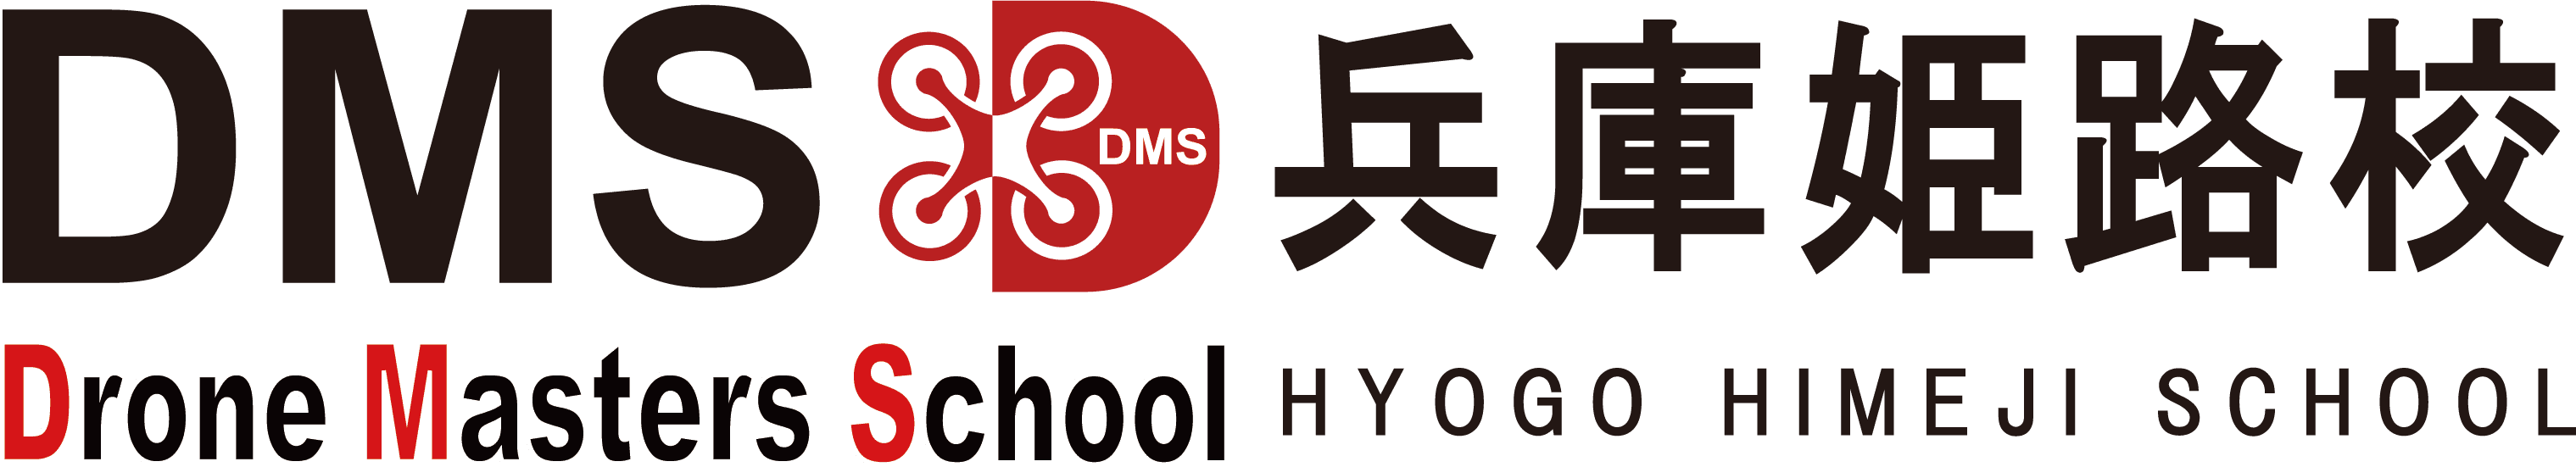 DMS 兵庫姫路校